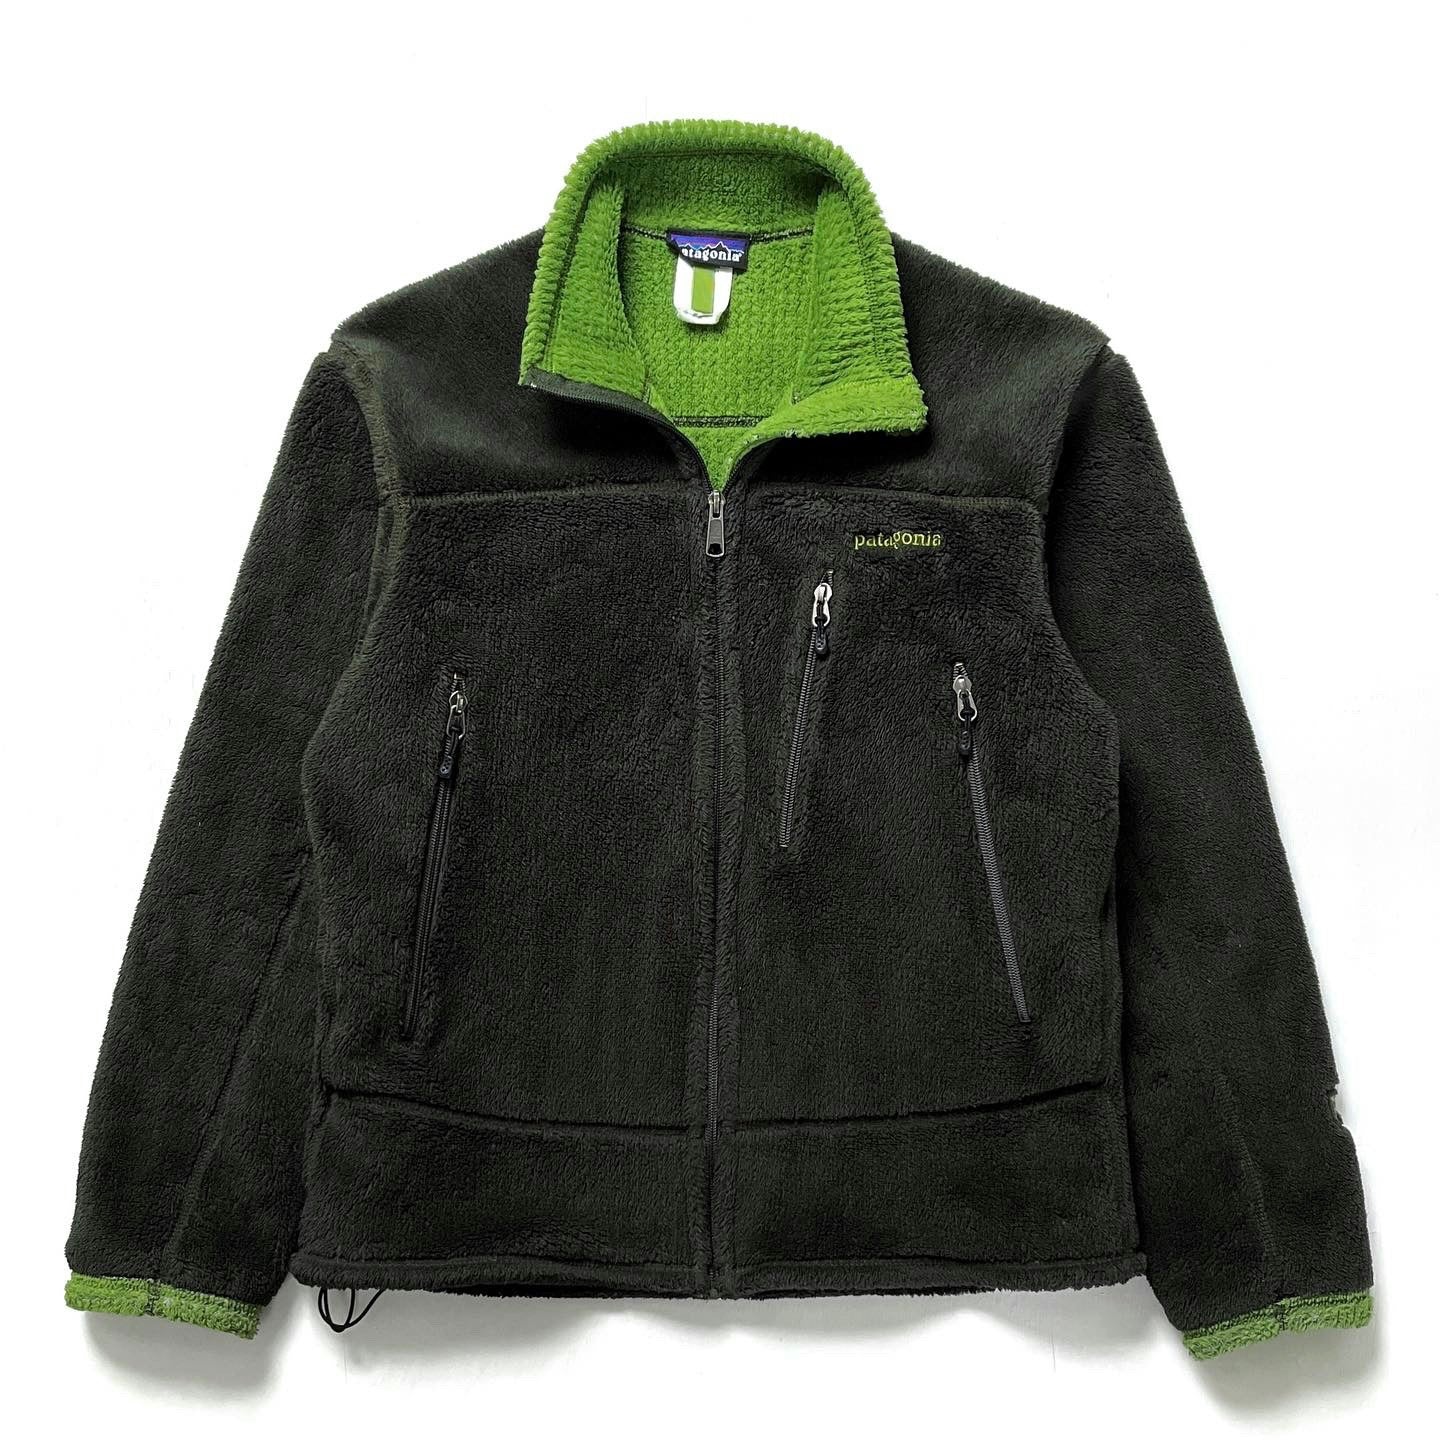 2004 Patagonia Mens R4 High-Pile Regulator Fleece Jacket, Loden (S)